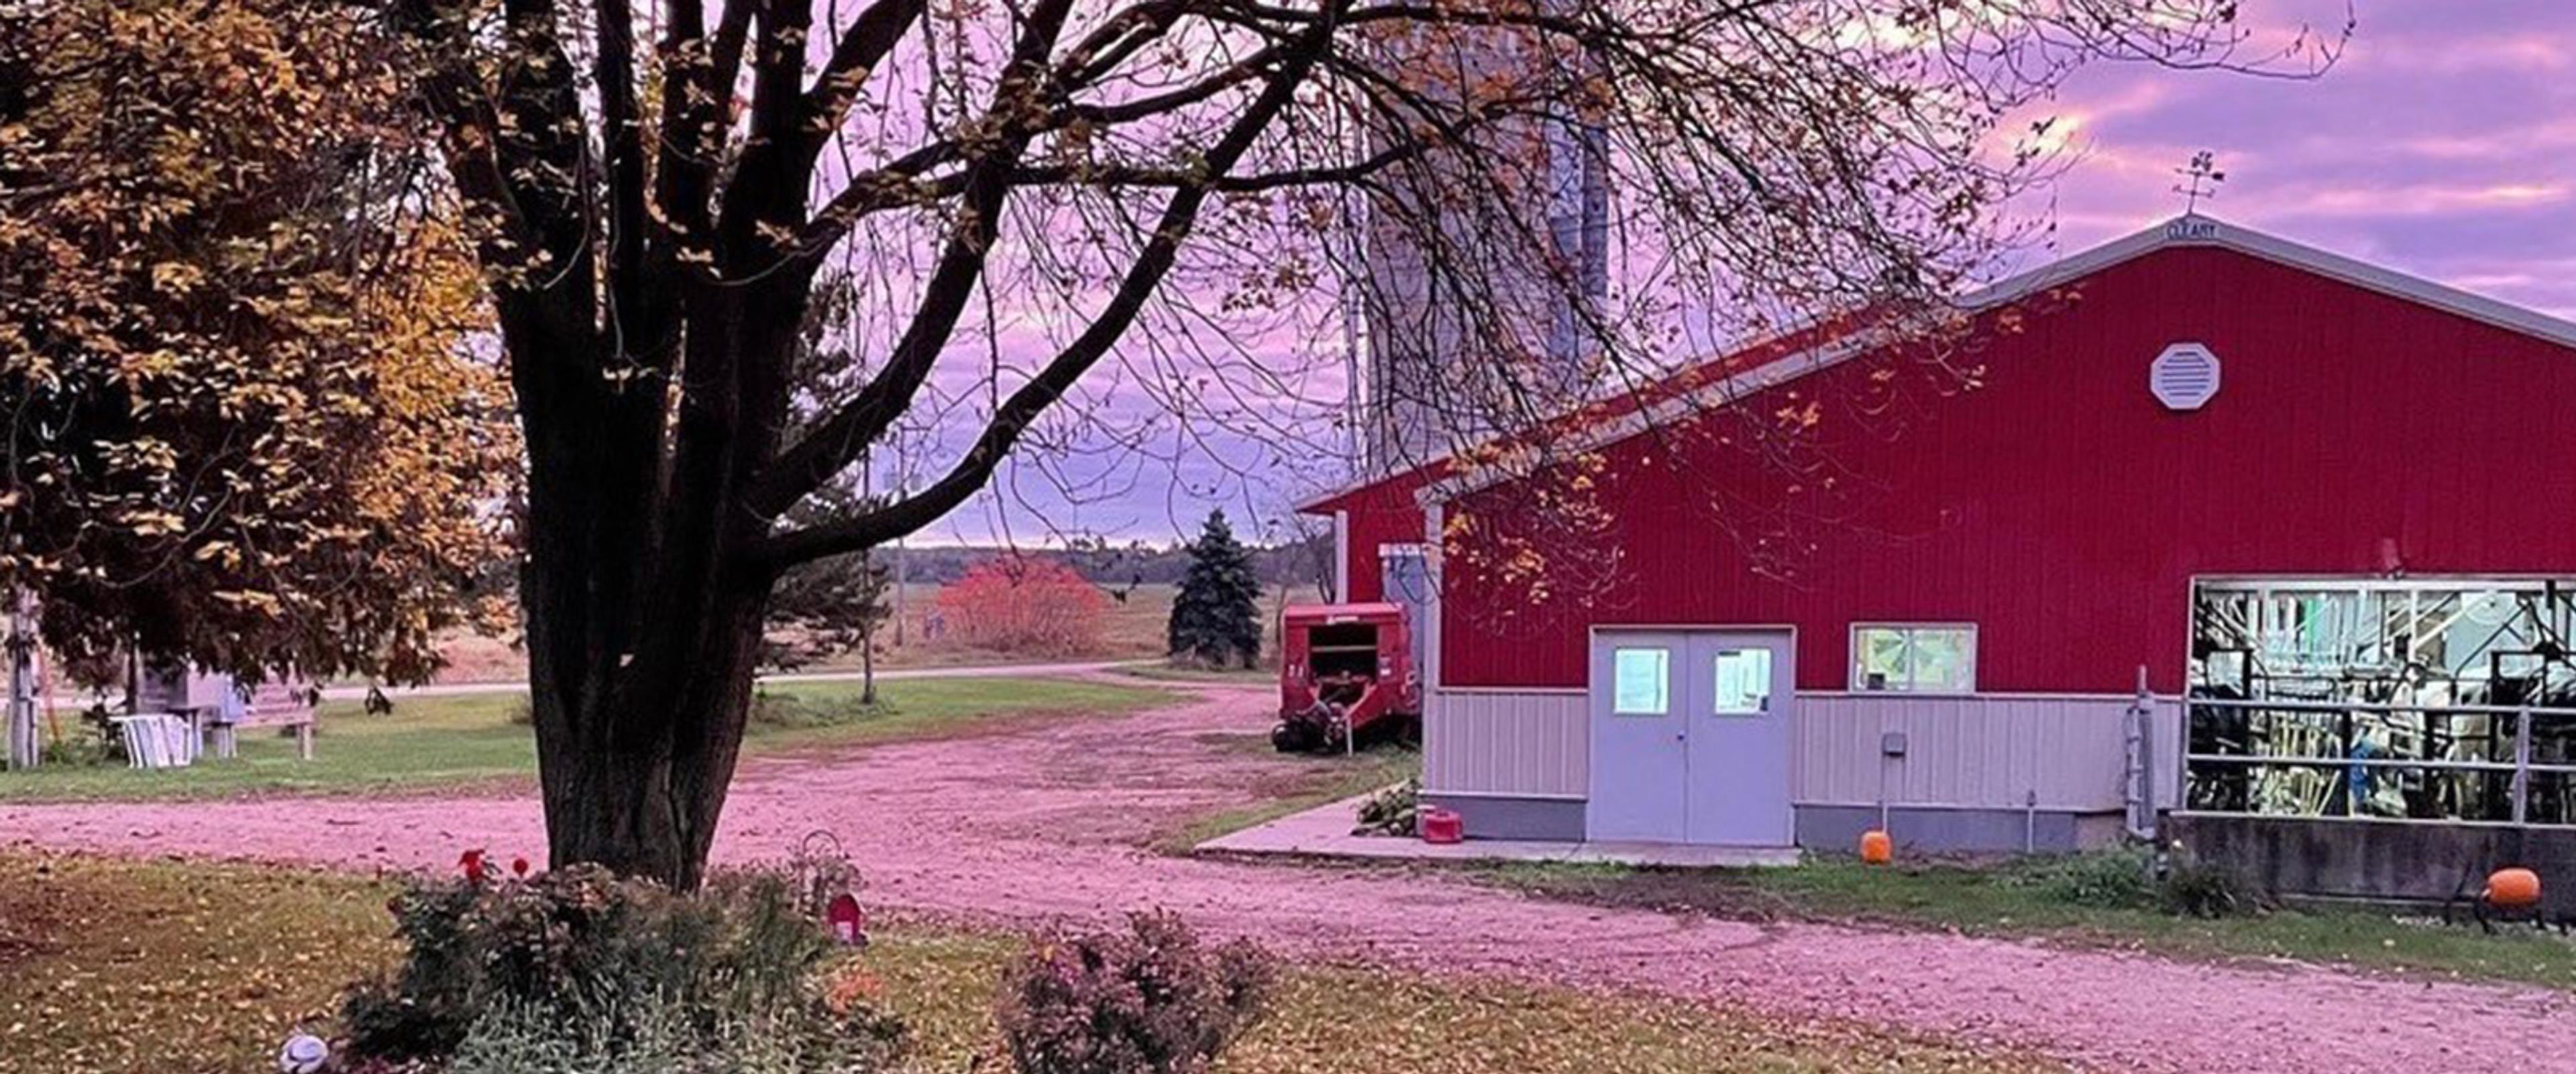 The Groen’s organic farm in Wisconsin.